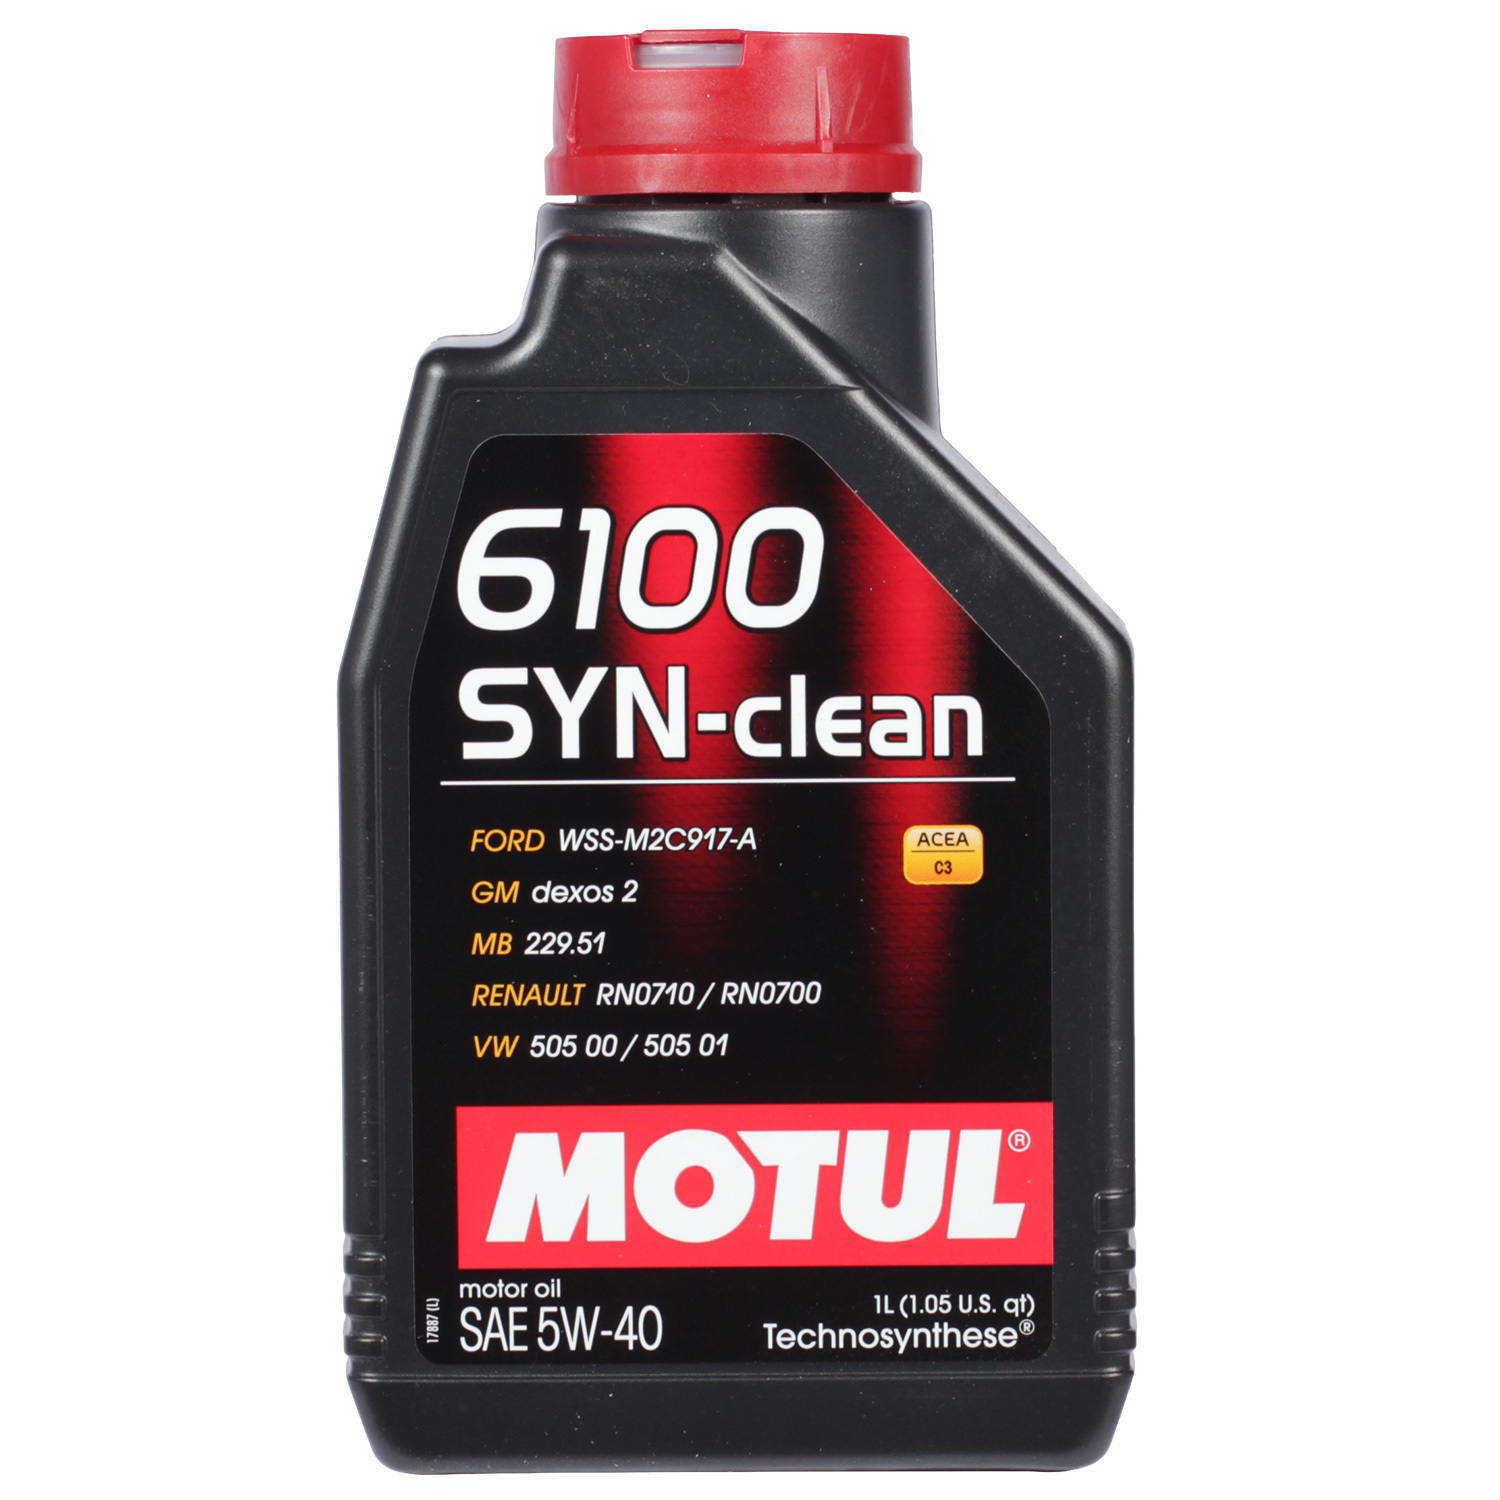 Motul Моторное масло Motul 6100 SYN-CLEAN 5W-40, 1 л motul масло моторное motul h tech 100 plus 5w 30 sp 1л asia 112141